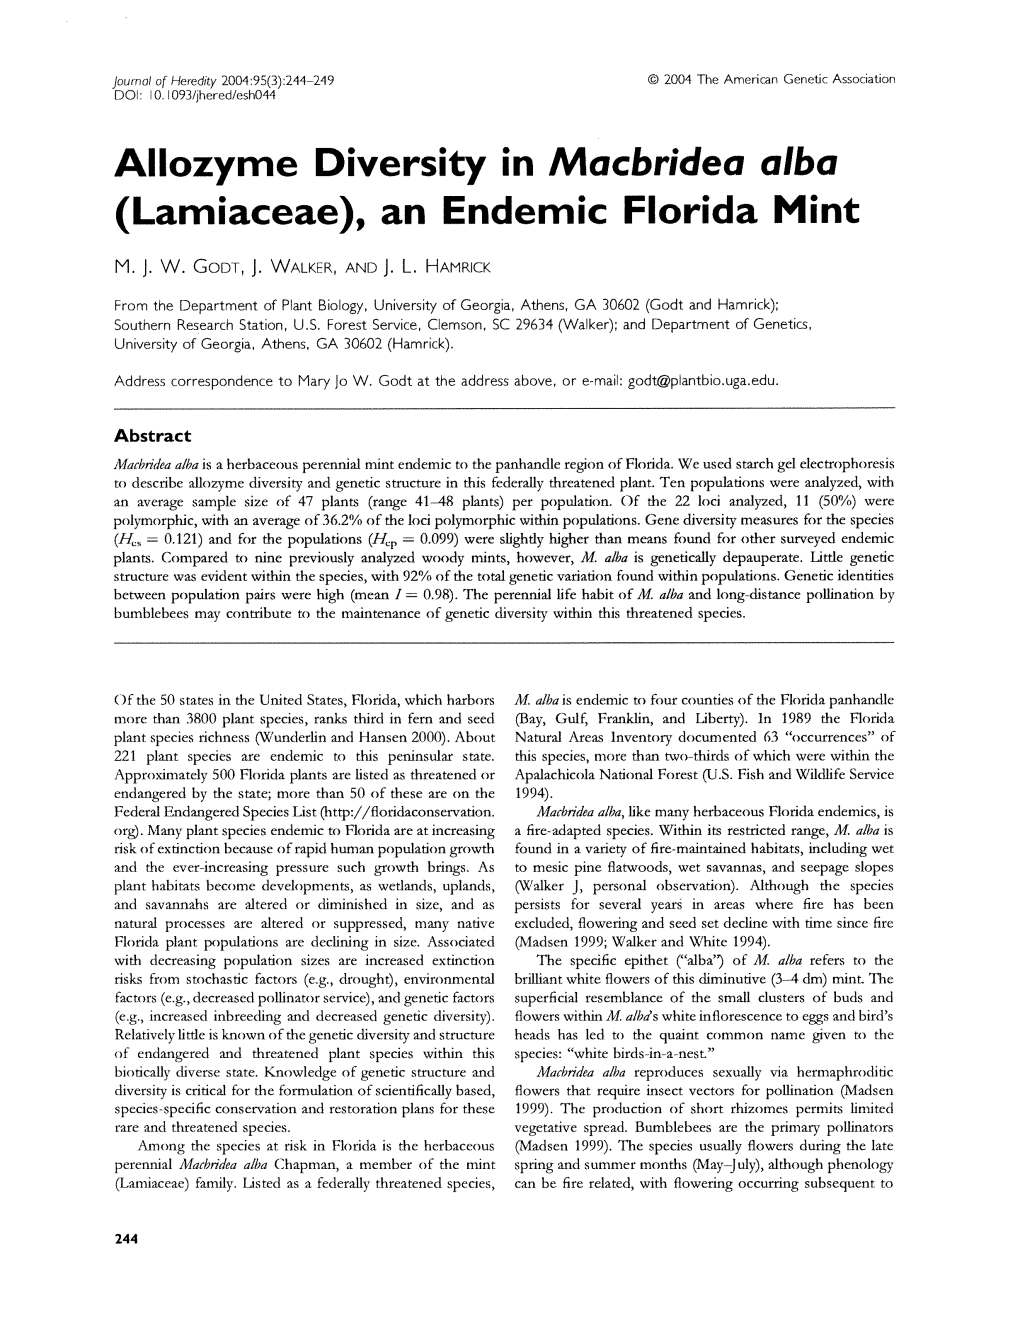 Allozyme Diversity in Macbridea Alba (Lamiaceae), an Endemic Florida Mint